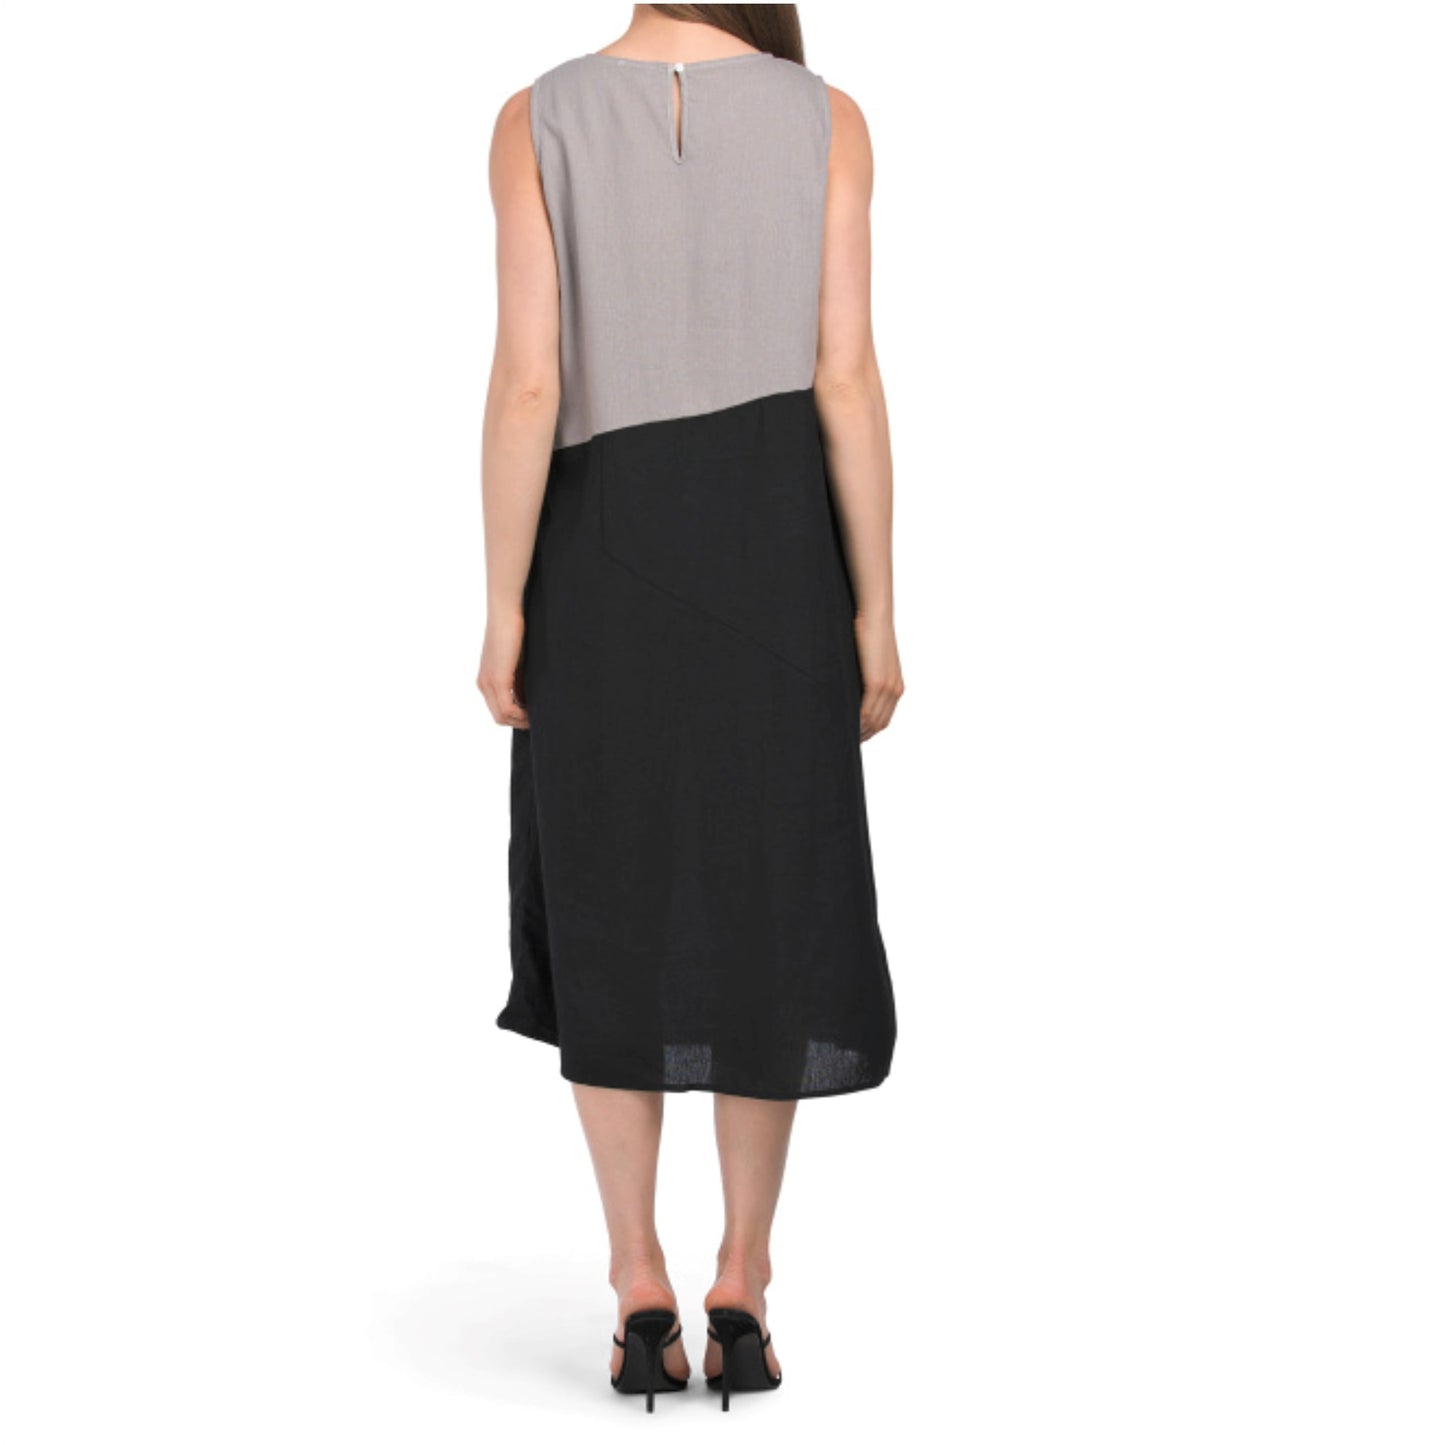 FORCYNTHIA Women's Linen Blend Colorblock Sleeveless Midi Dress